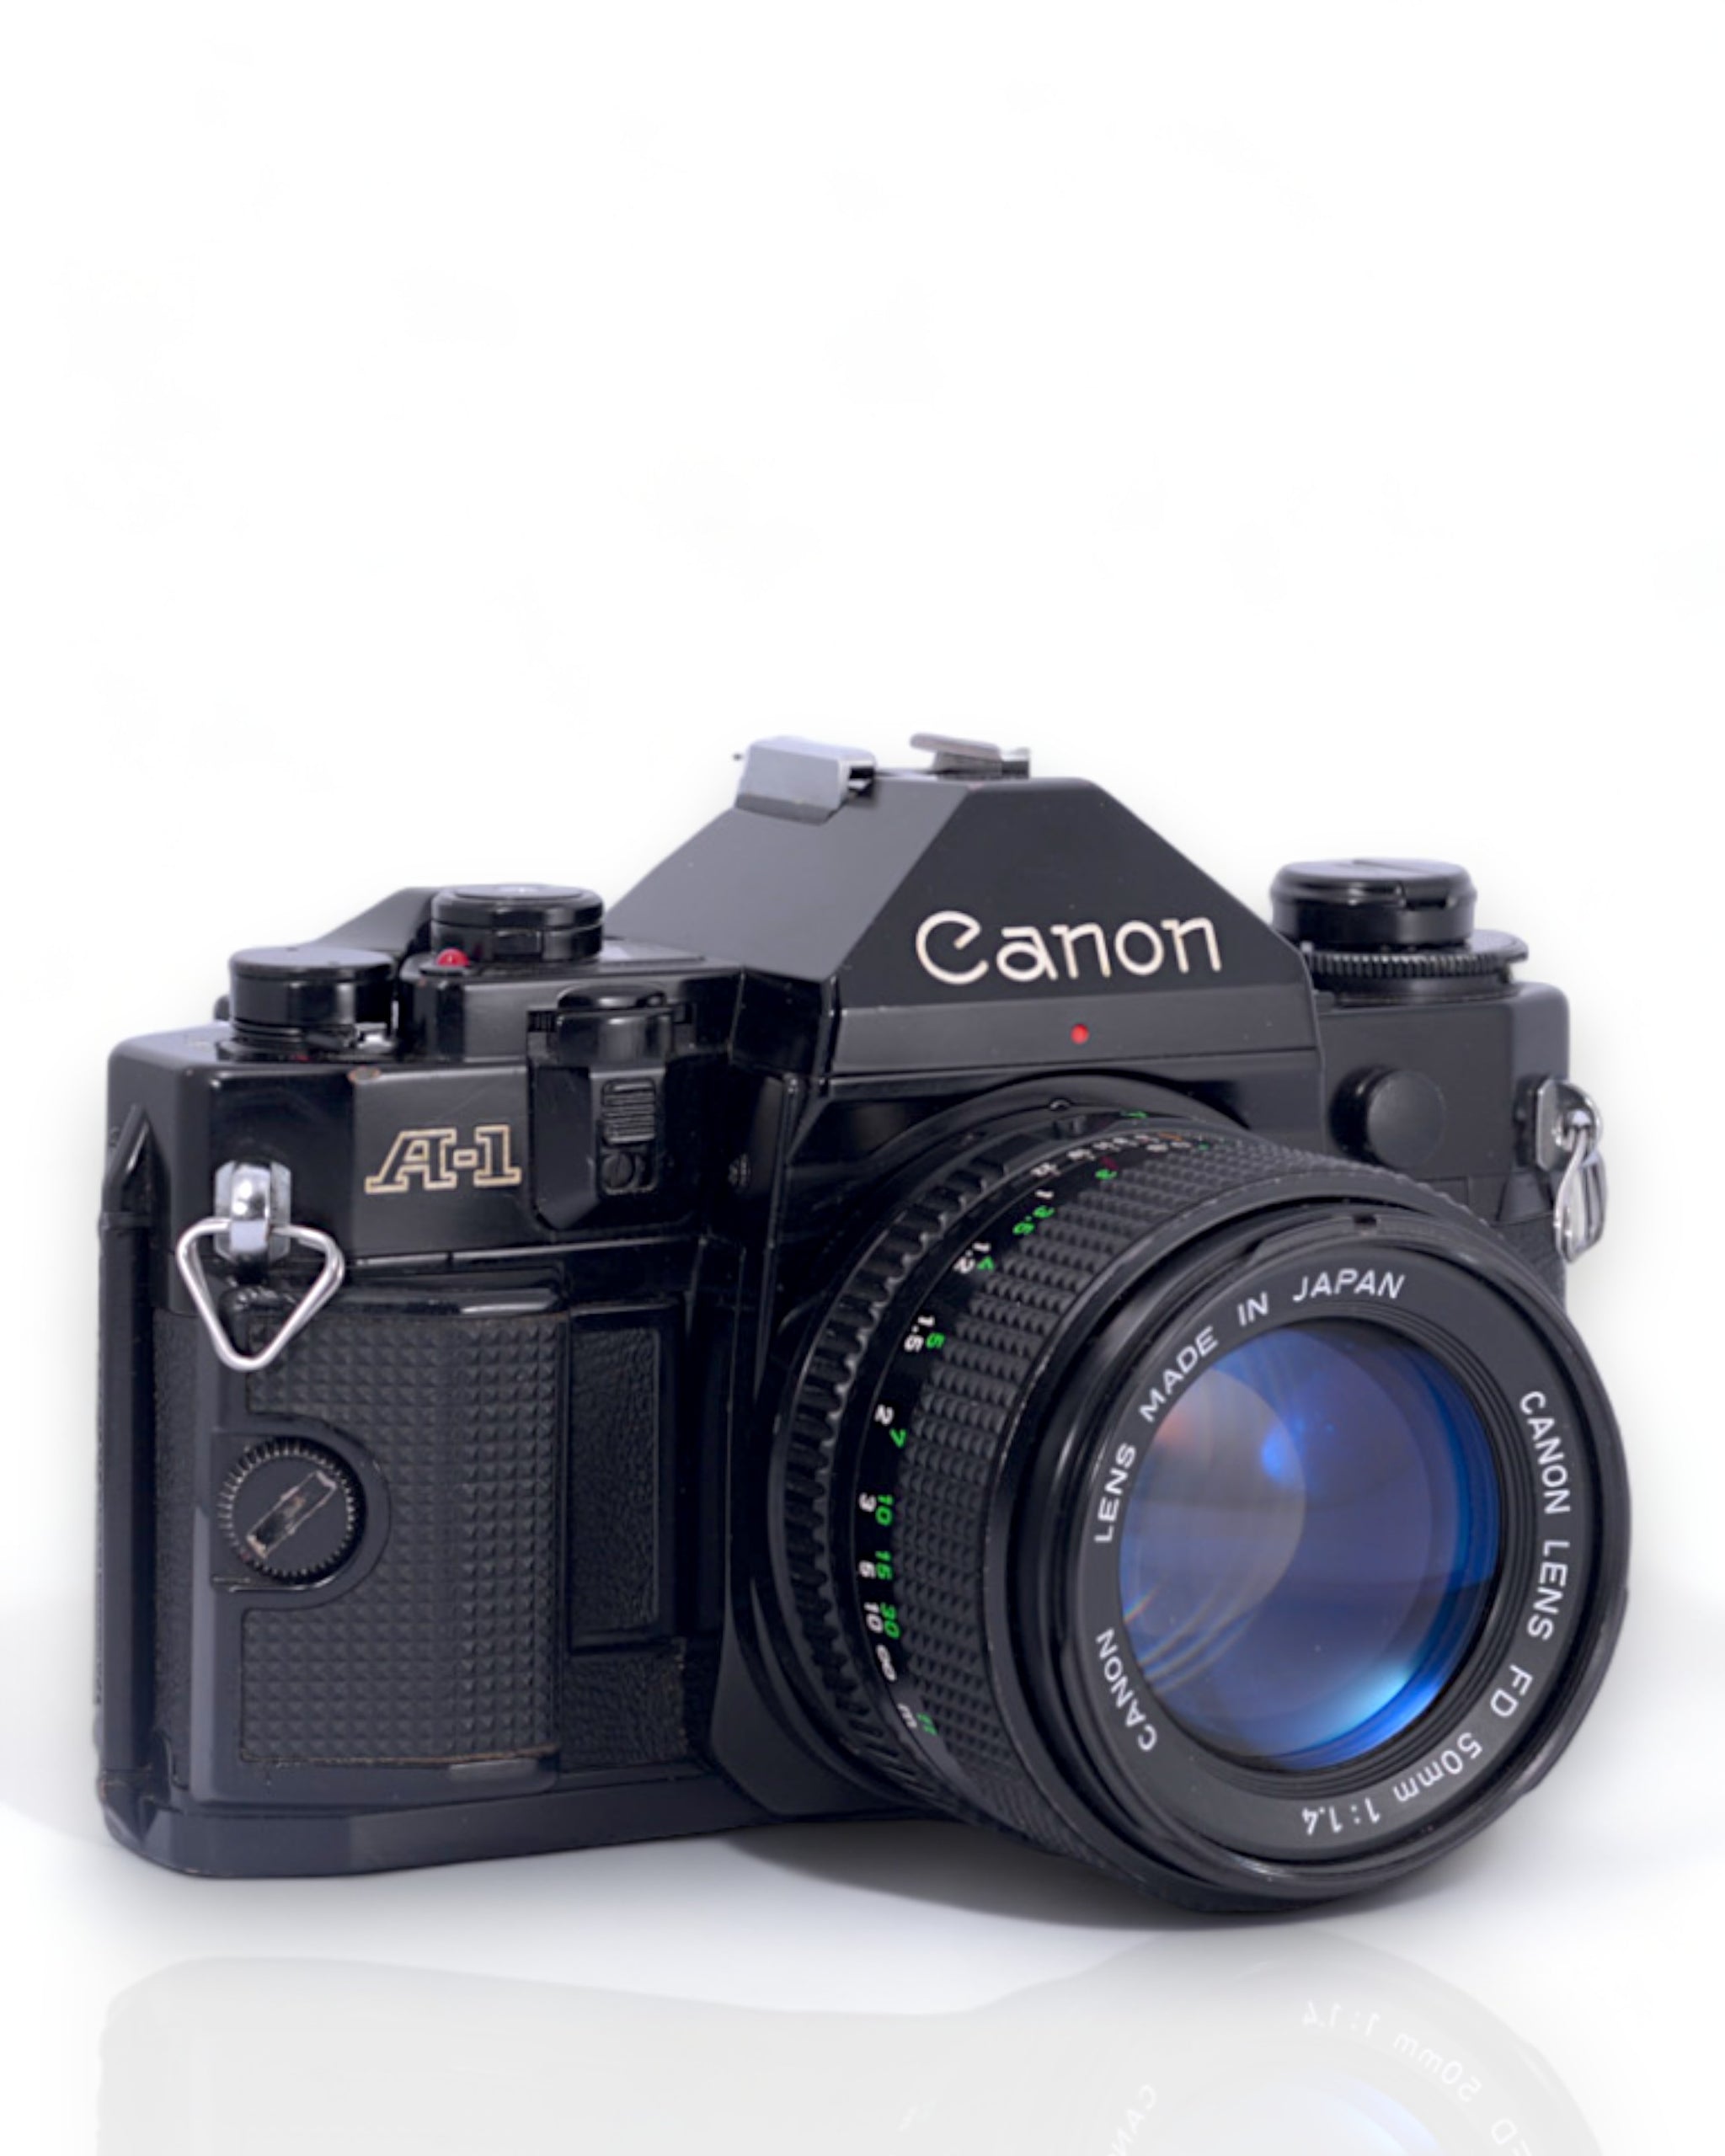 Canon A-1 Program 35mm SLR film camera with 50mm f1.4 lens - Mori 